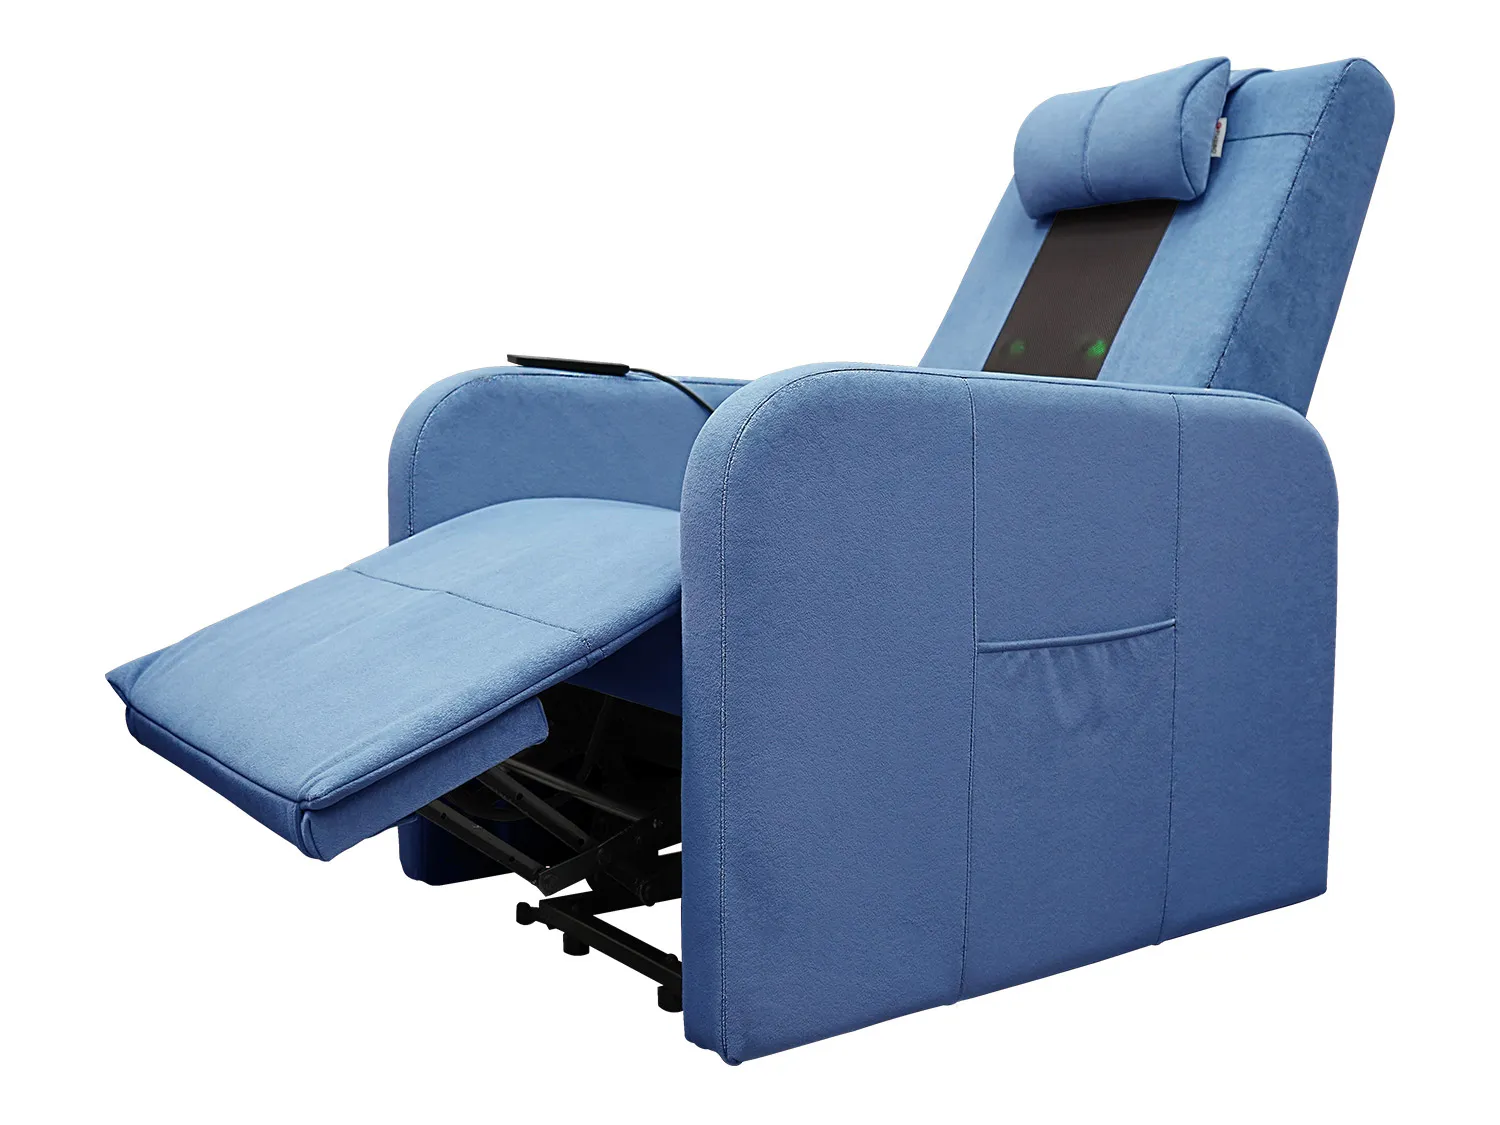 Массажное кресло реклайнер с подъемом FUJIMO LIFT CHAIR F3005 FLFK цвет на заказ - 6 